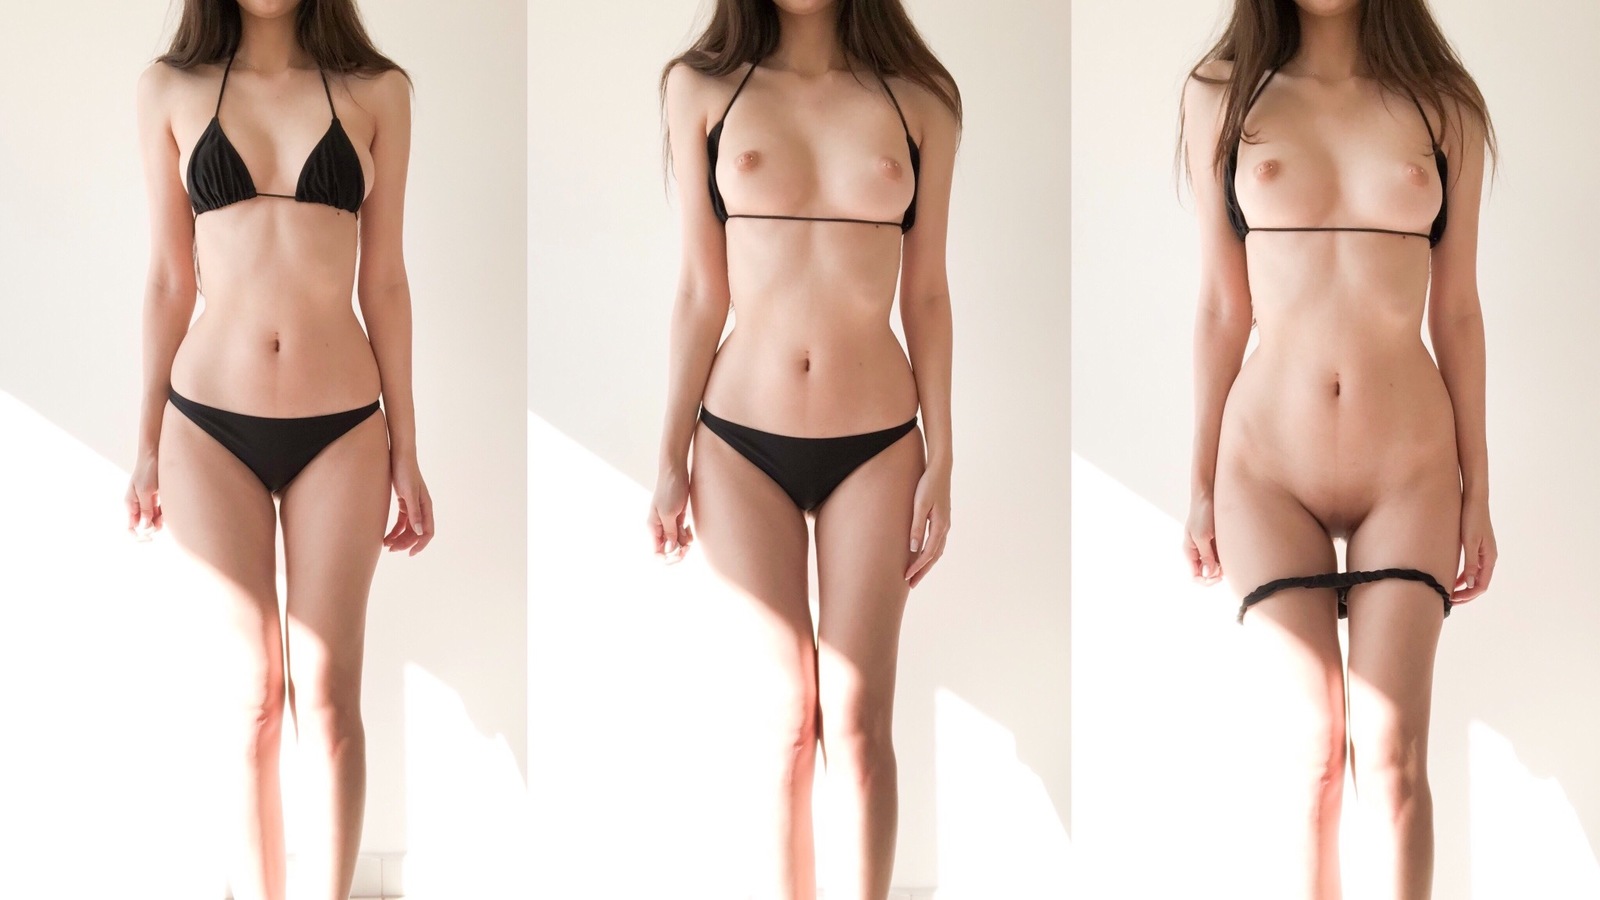 Bikinihuntress naked